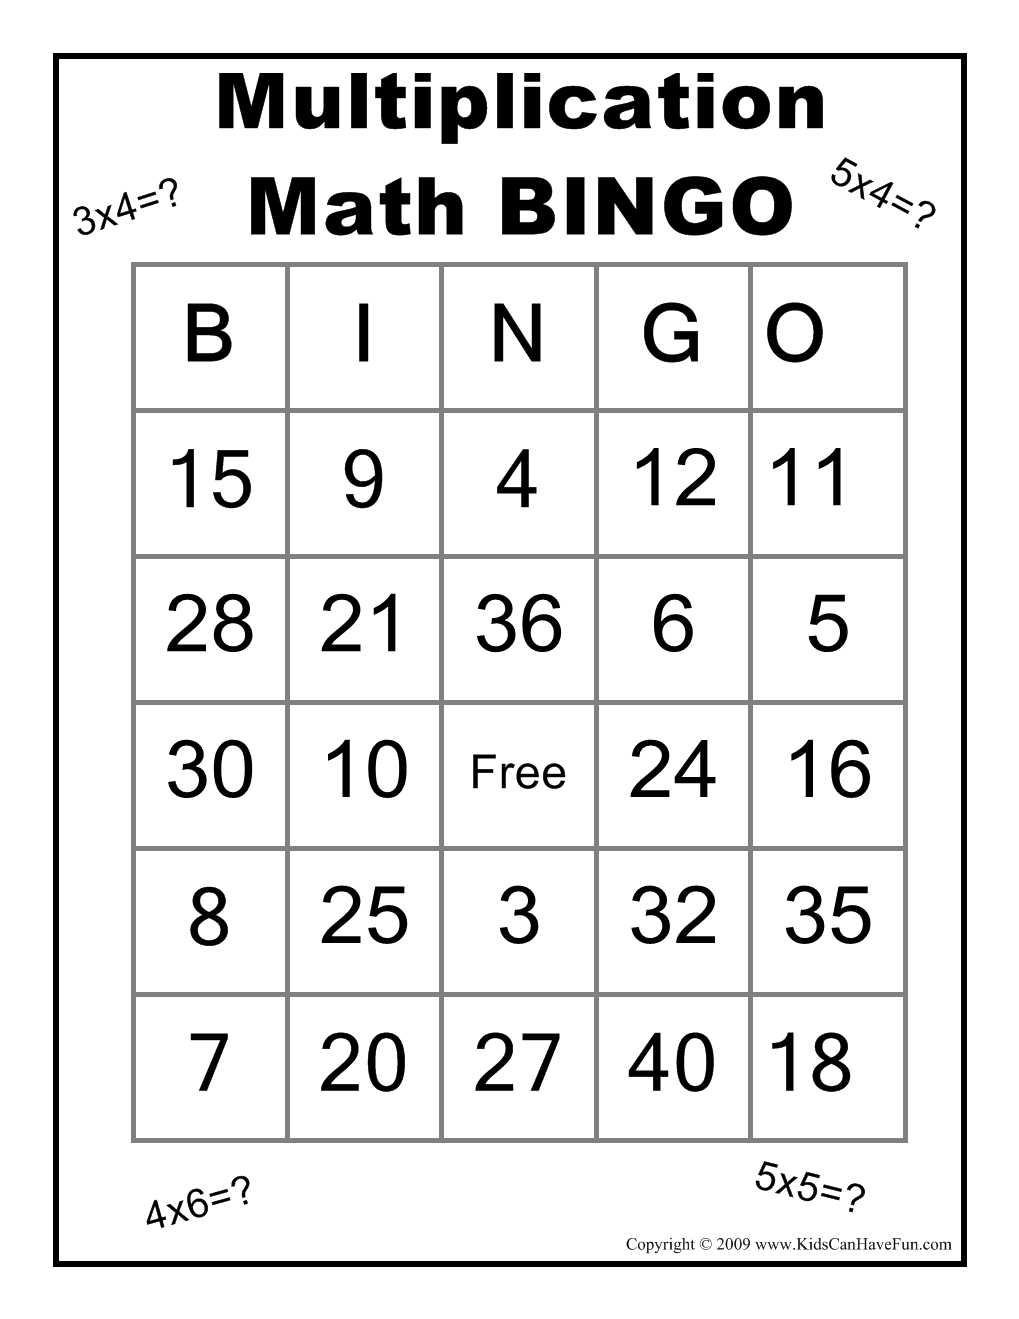 Multiplication Math Bingo Game Http://www.kidscanhavefun